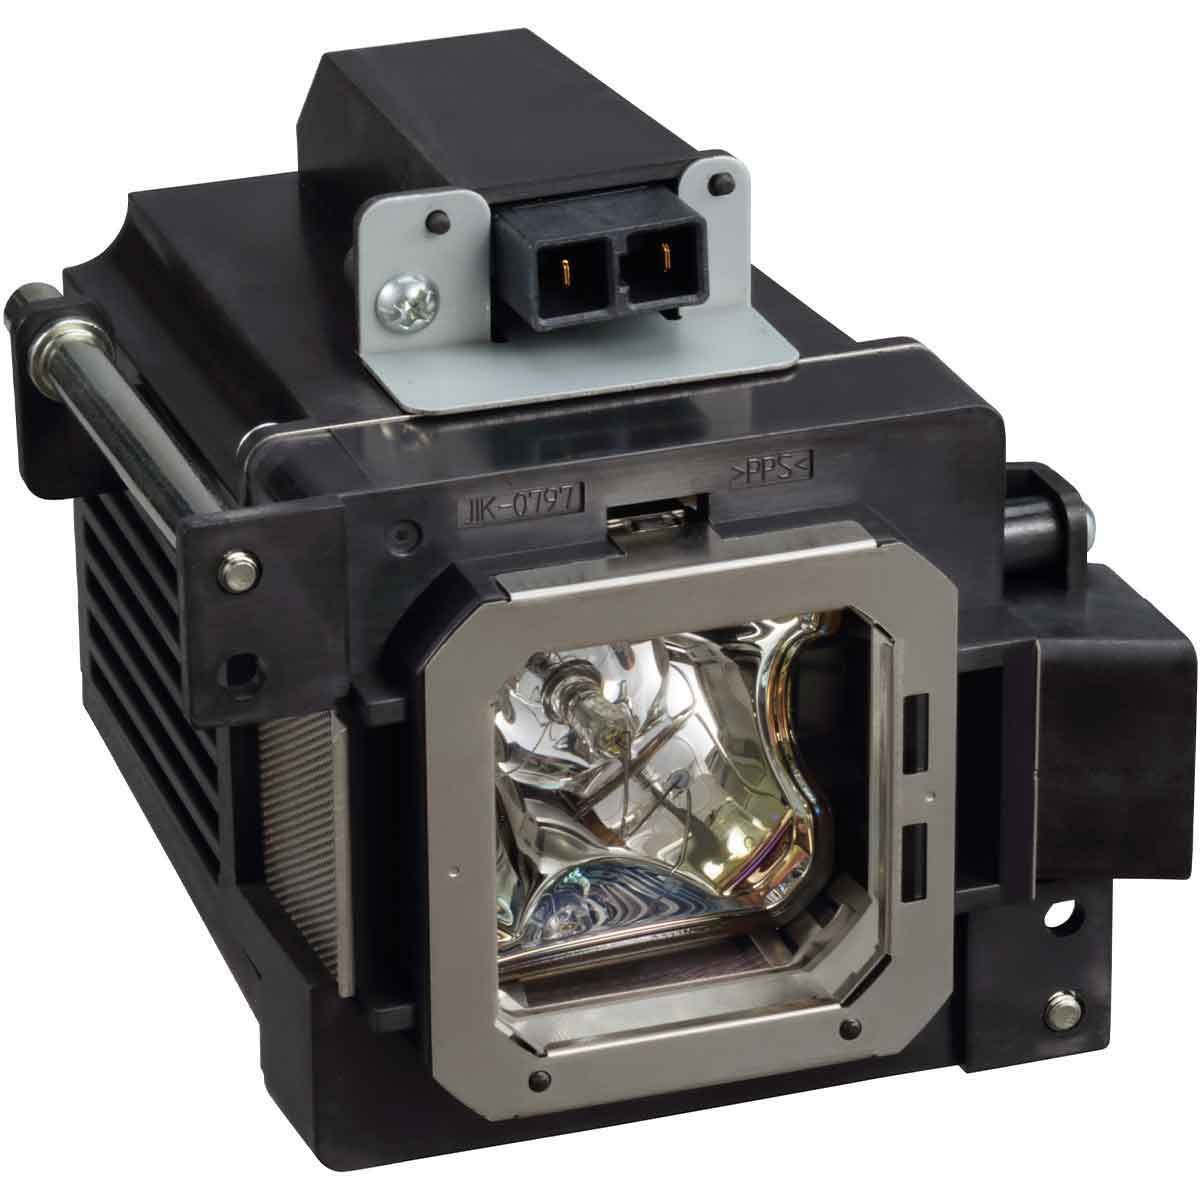 close up image of JVC PK-L2618U 256-watt Replacement lamp for JVC D-ILA projectors

